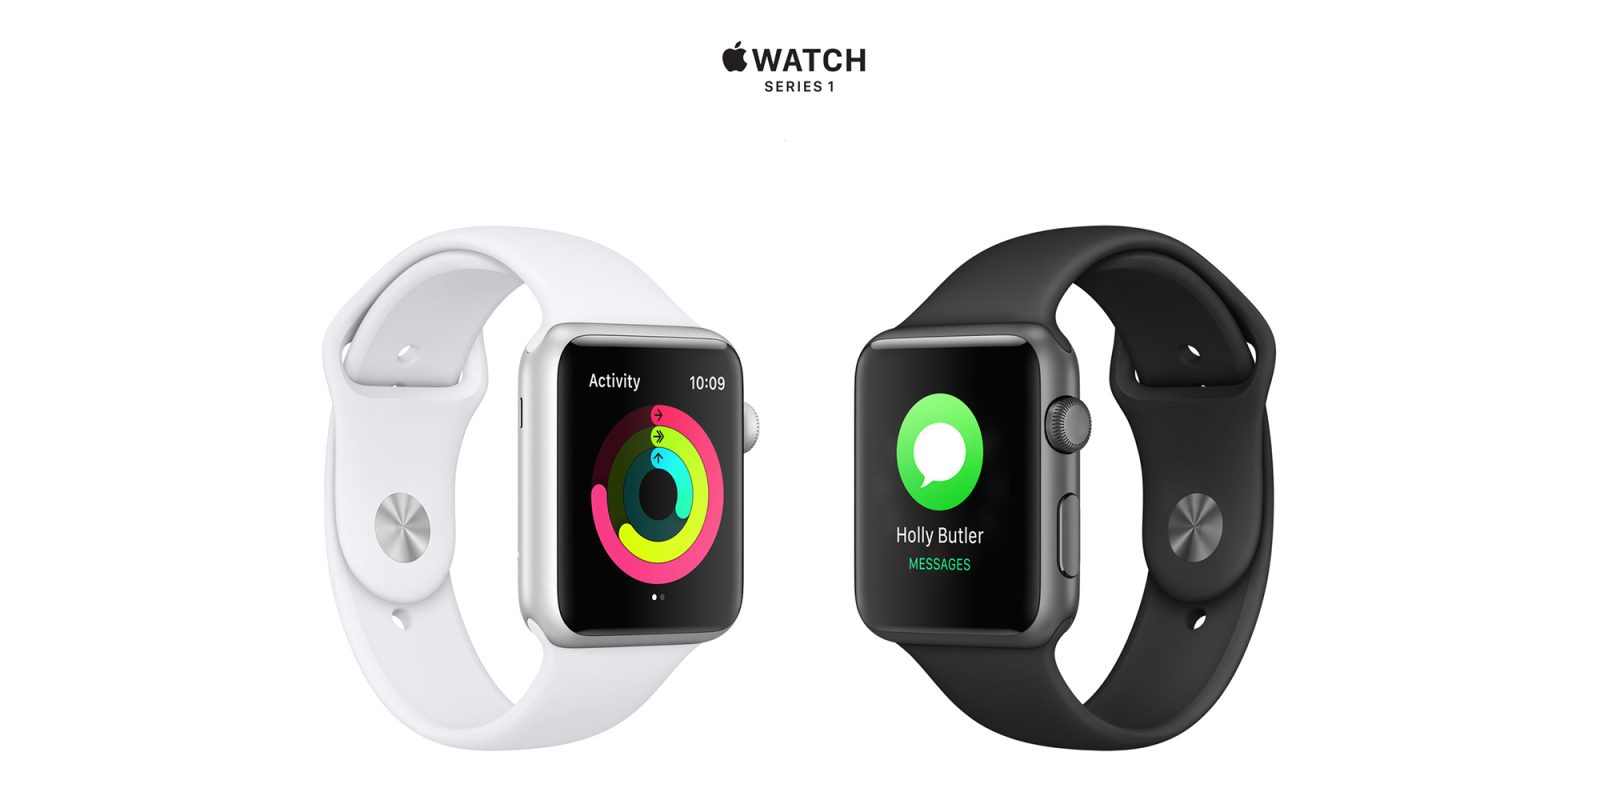 Apple discounts refurbished iPhone 7/Plus & Apple Watch 